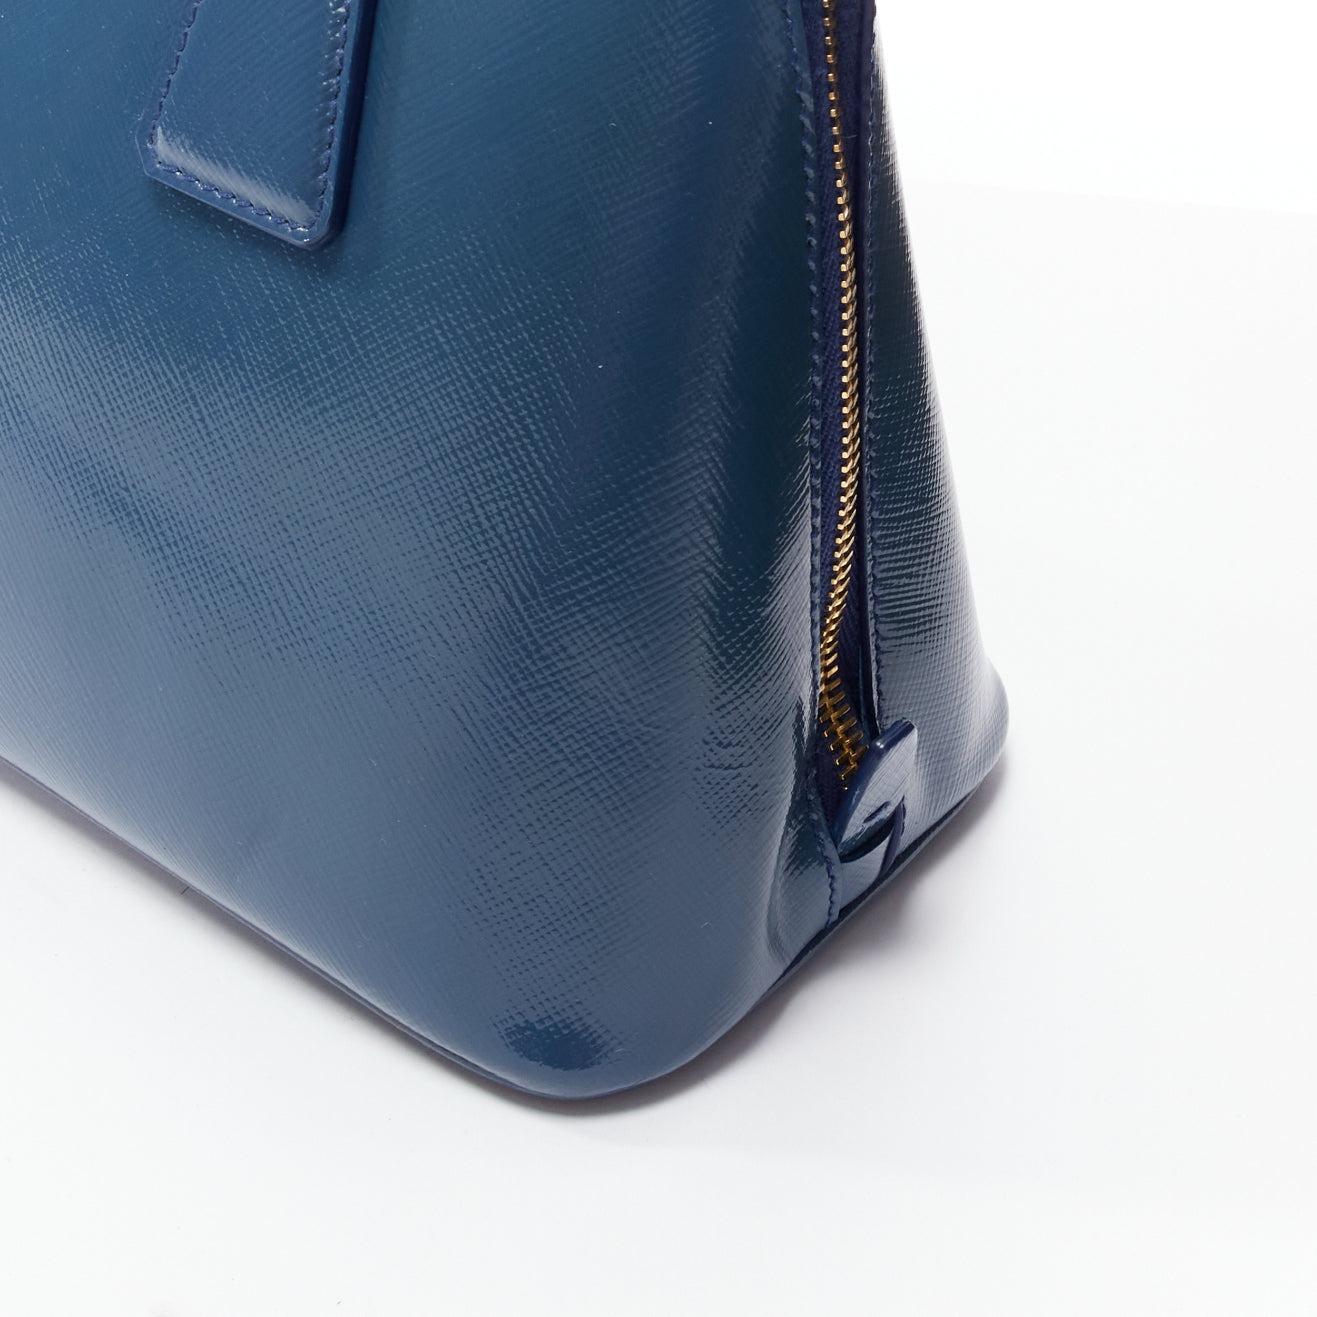 PRADA Promenade Vernice Saffiano blue leather triangle logo top handle tote bag For Sale 3